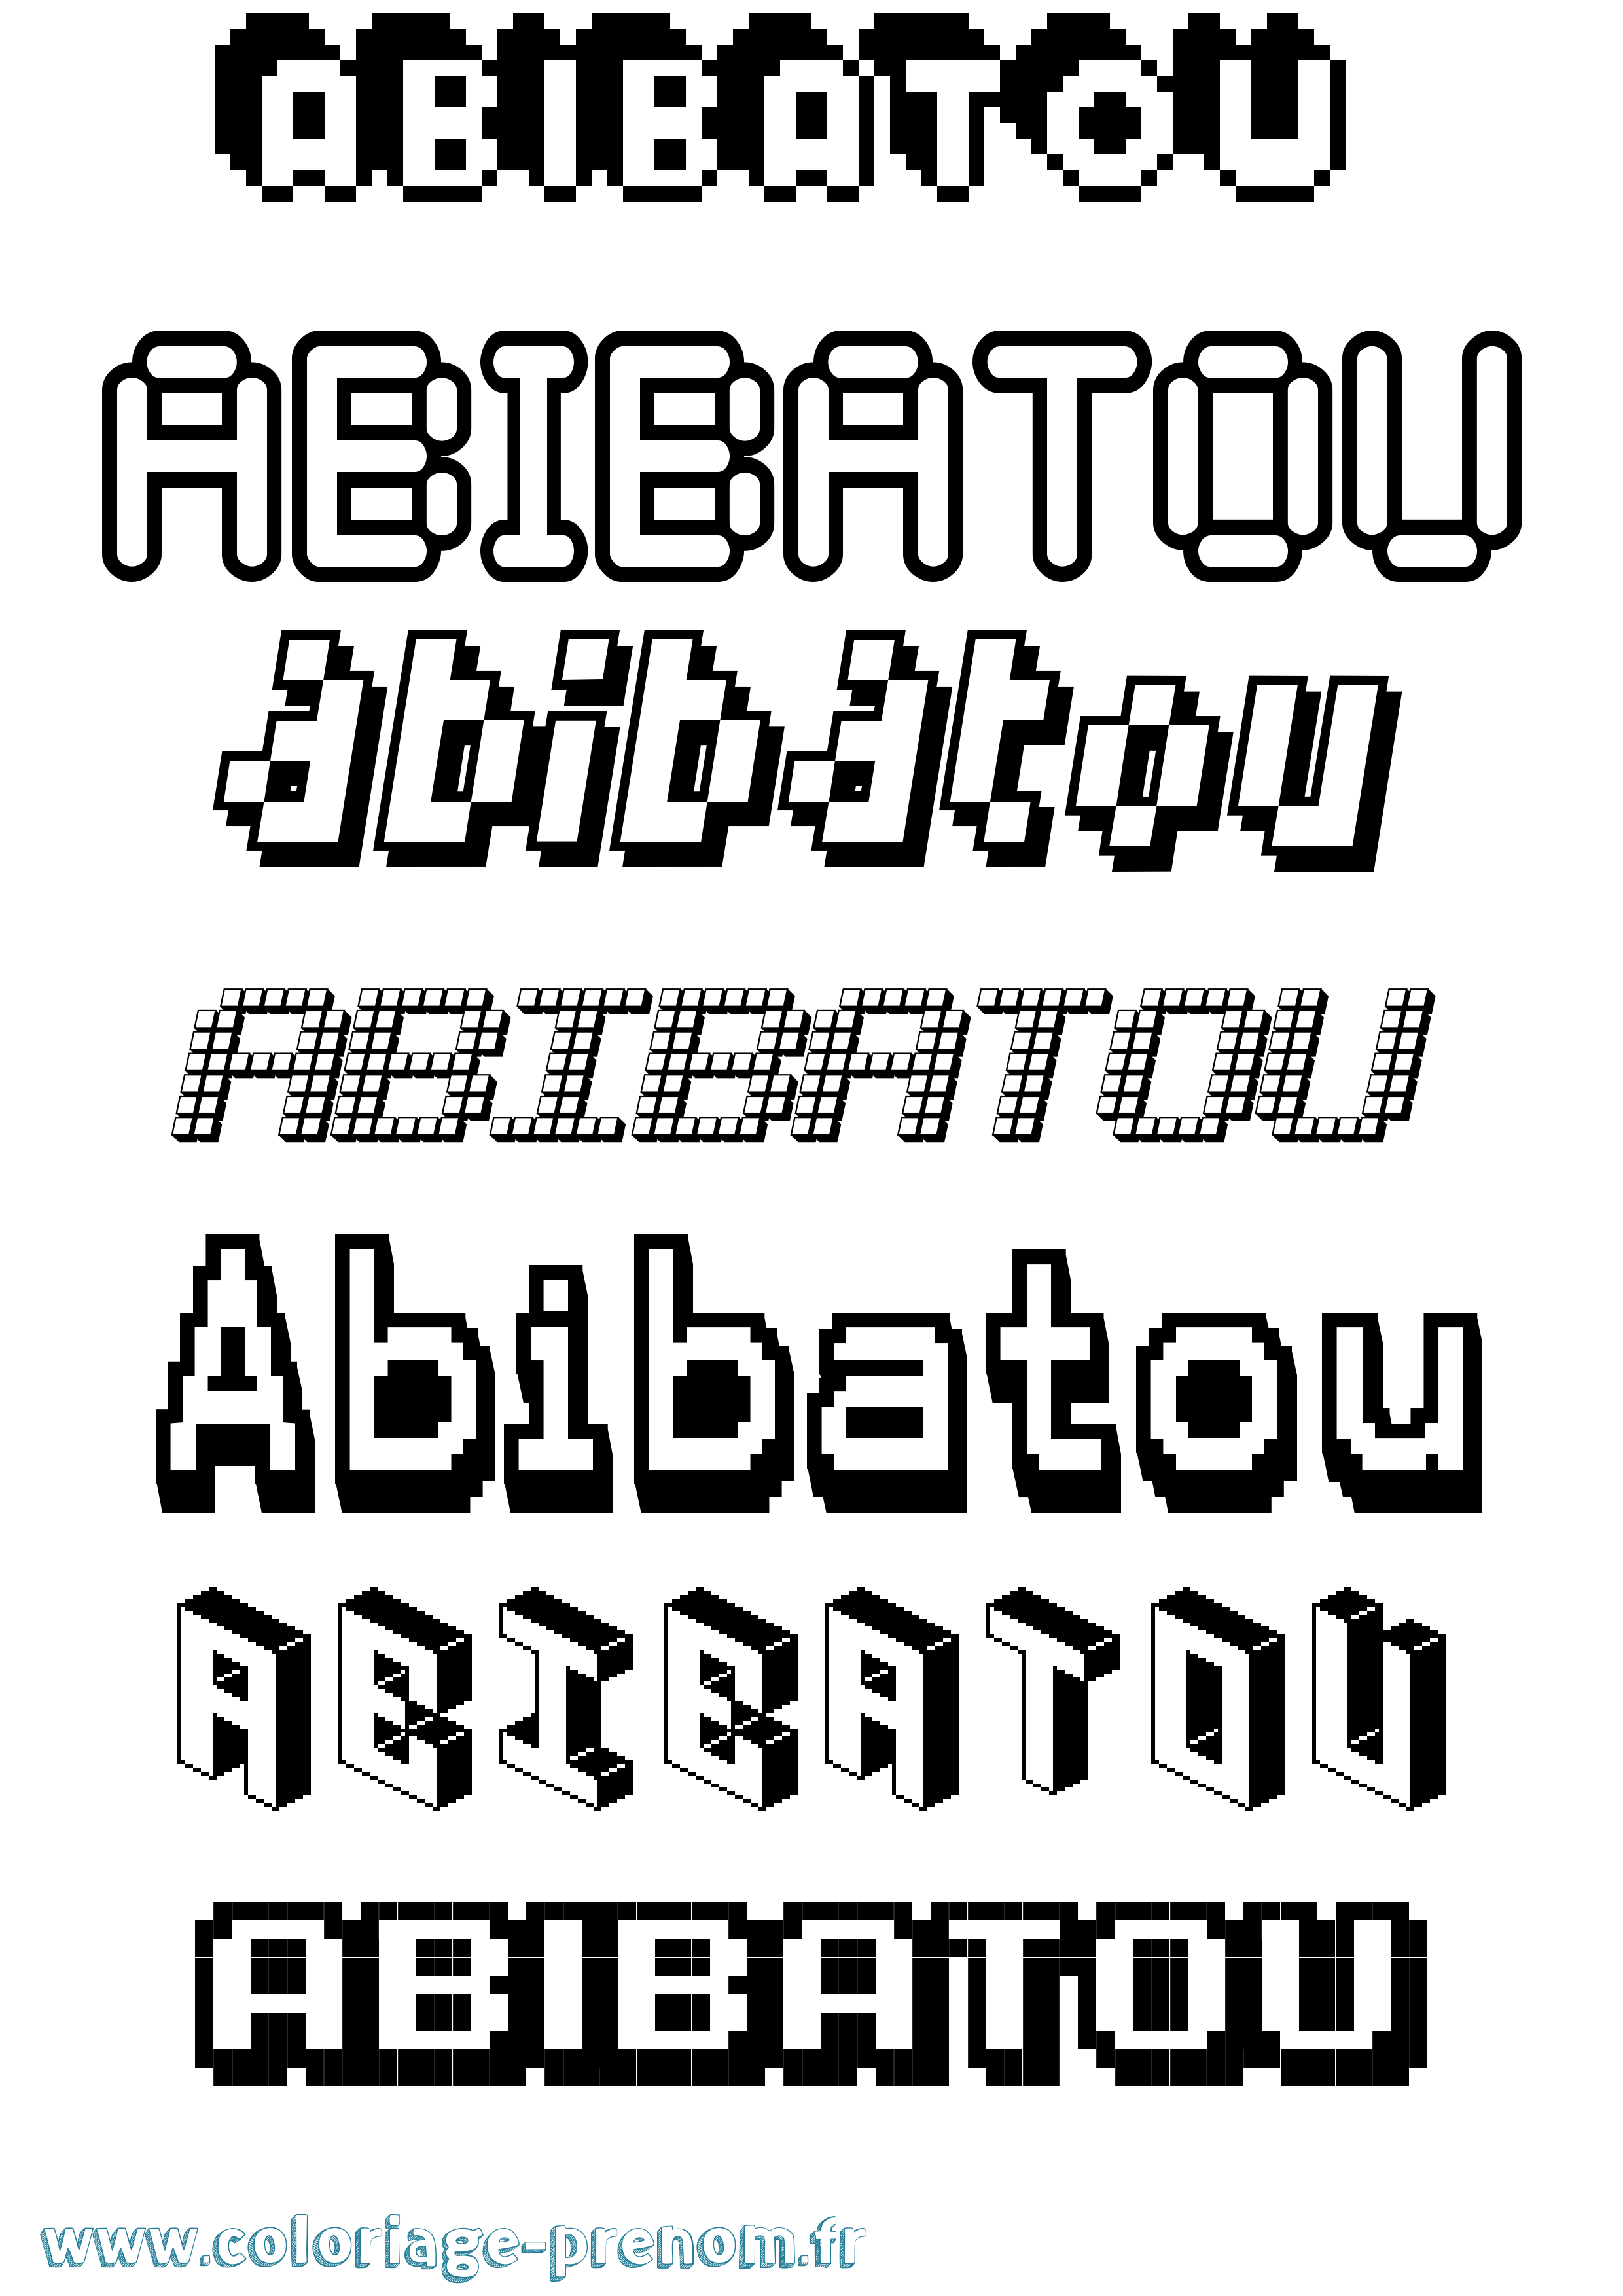 Coloriage prénom Abibatou Pixel